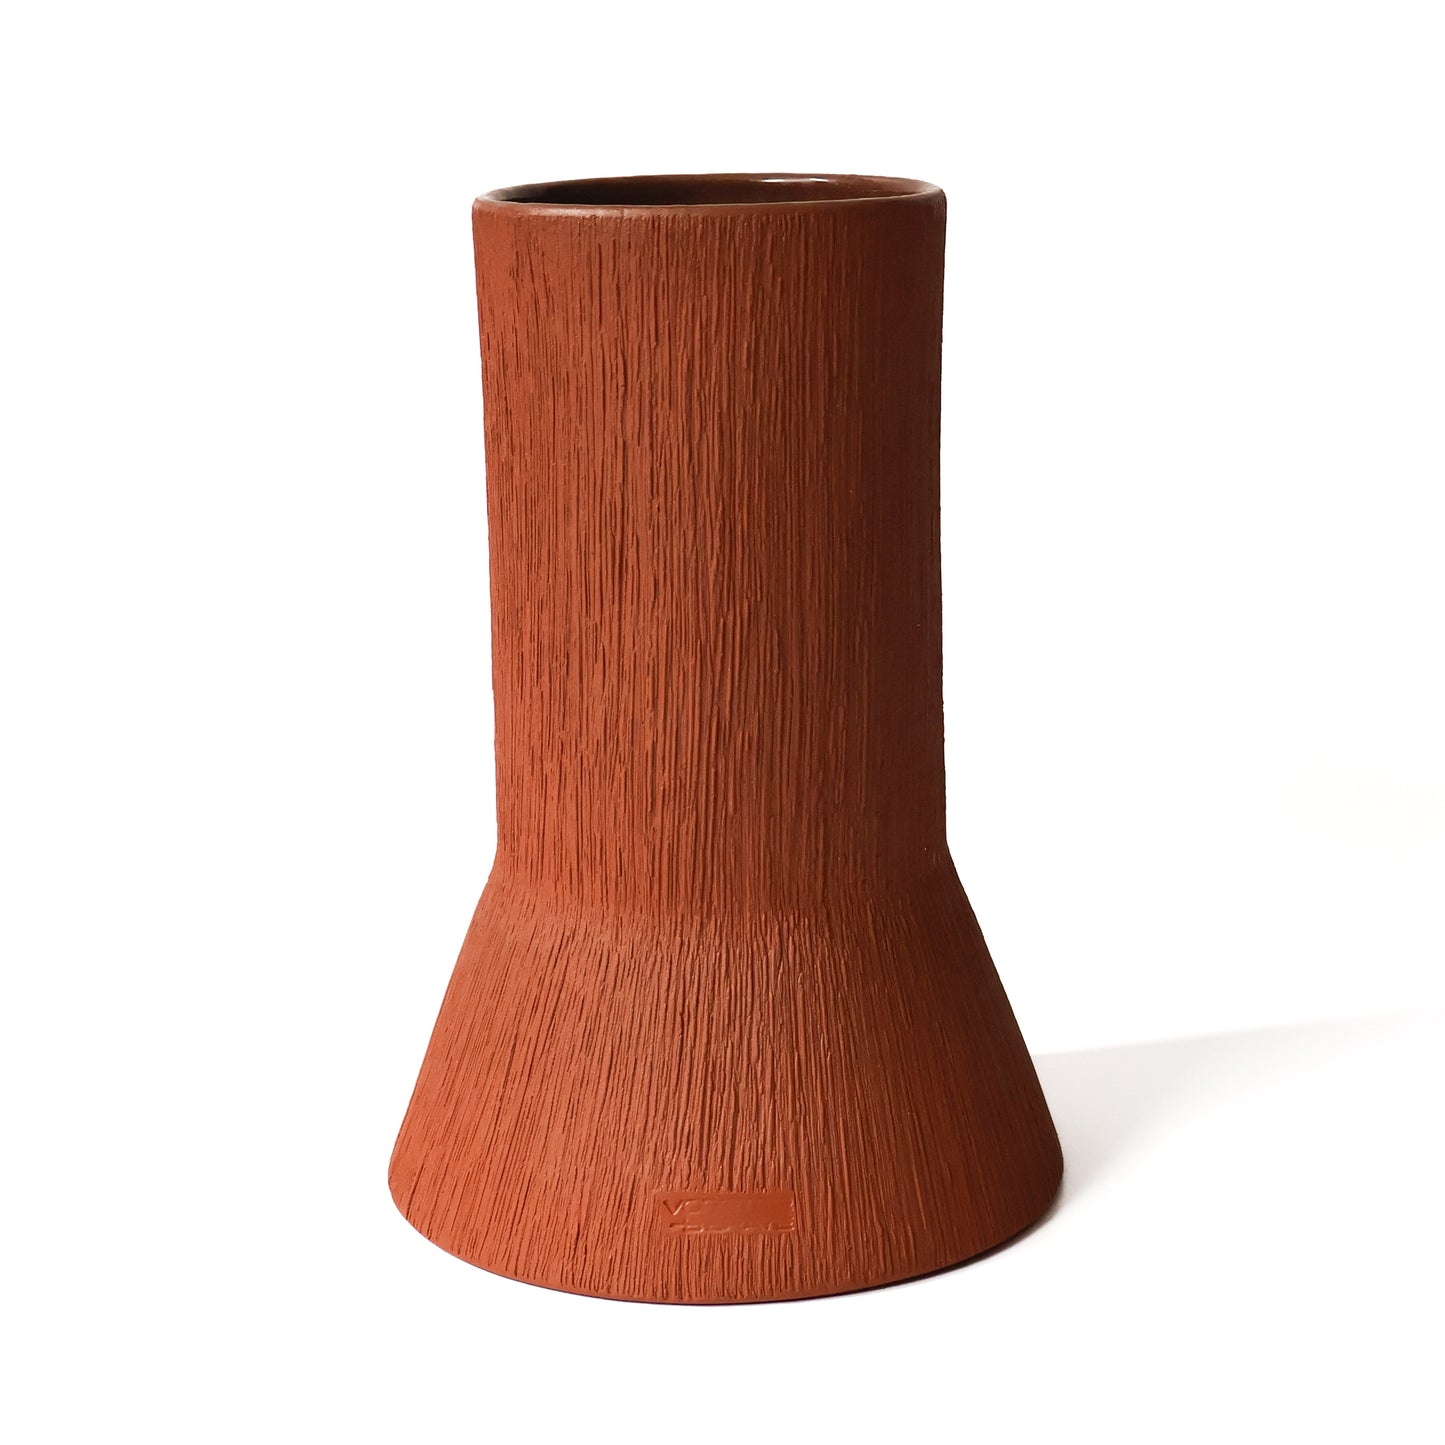 Restio Vase / Standard